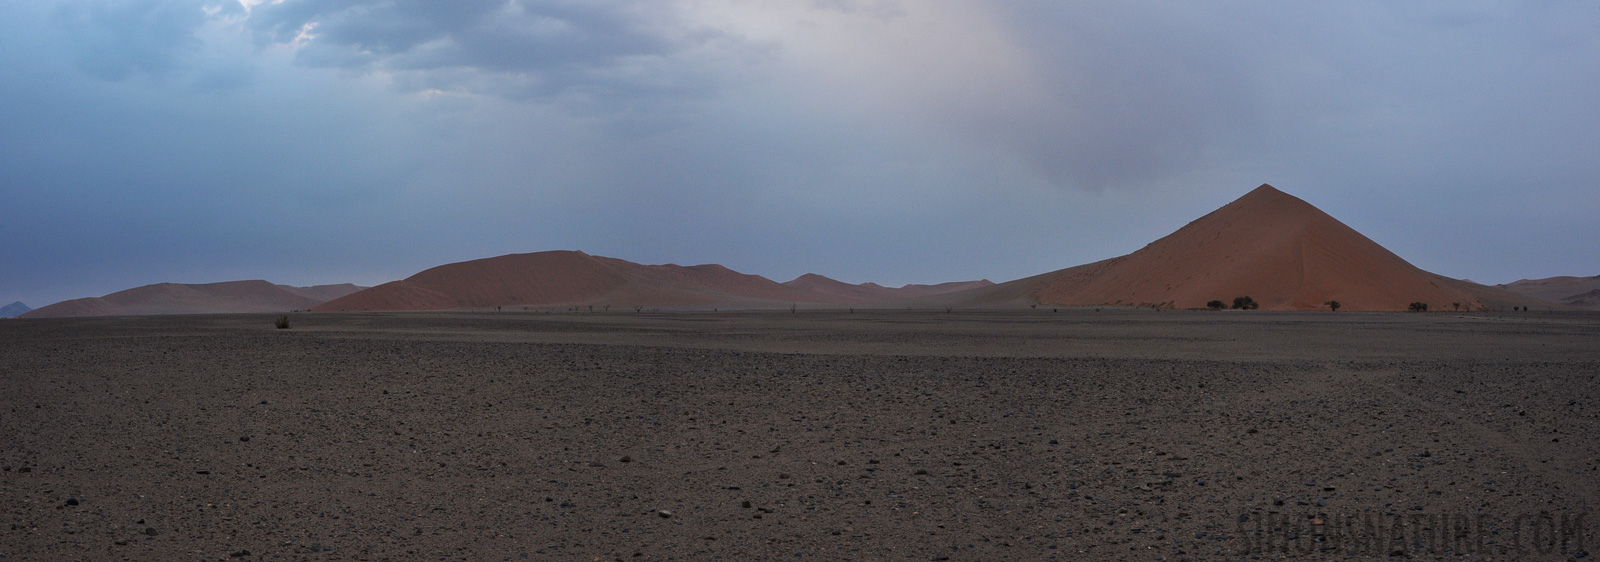 Namib-Naukluft National Park [28 mm, 1/50 Sek. bei f / 11, ISO 1250]